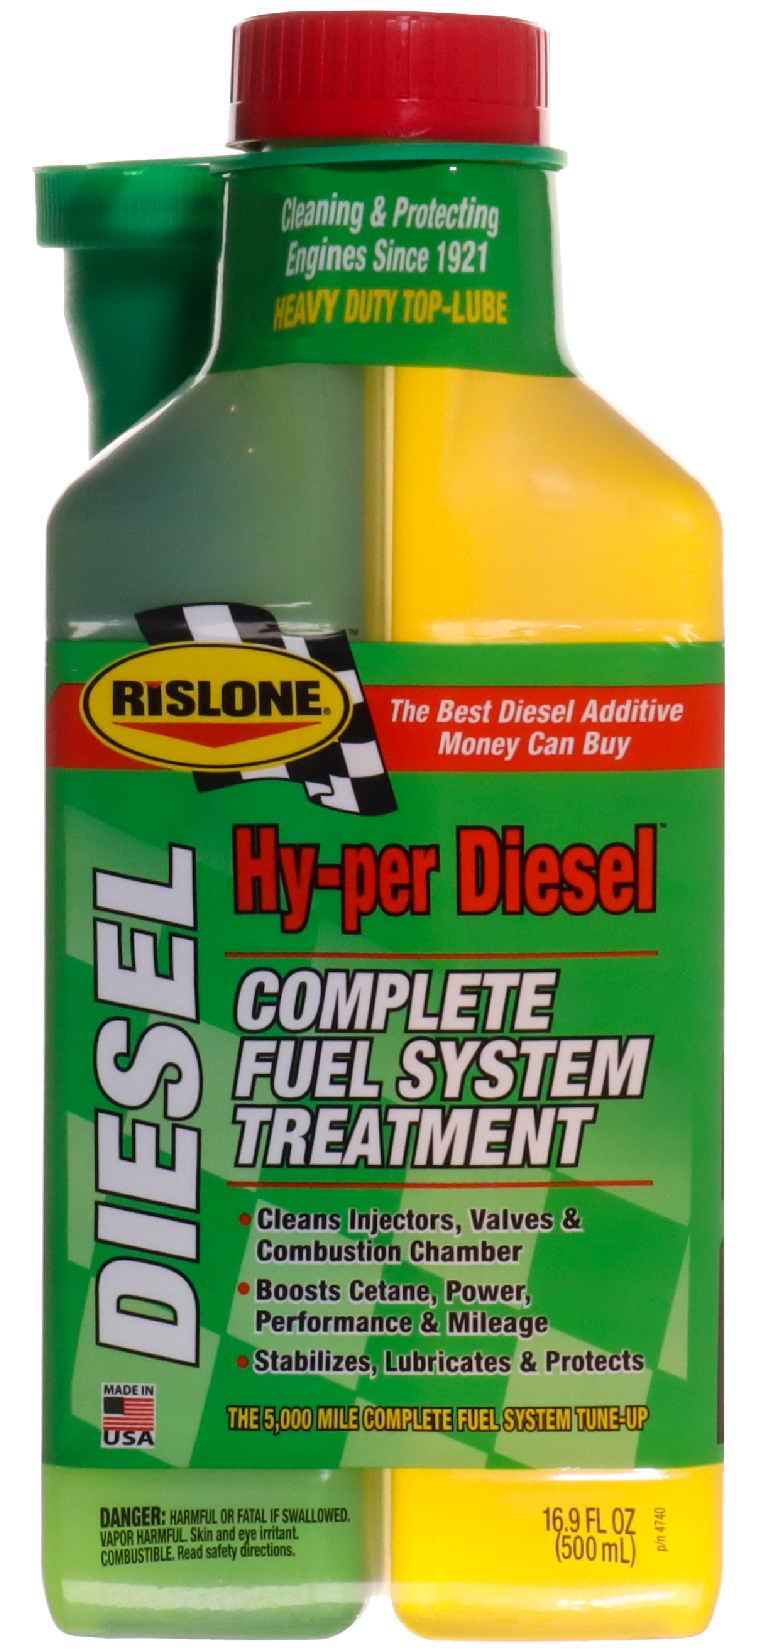 Start prevented. Diesel fuel treatment. Rislone. Rislone Hyper Diesel.